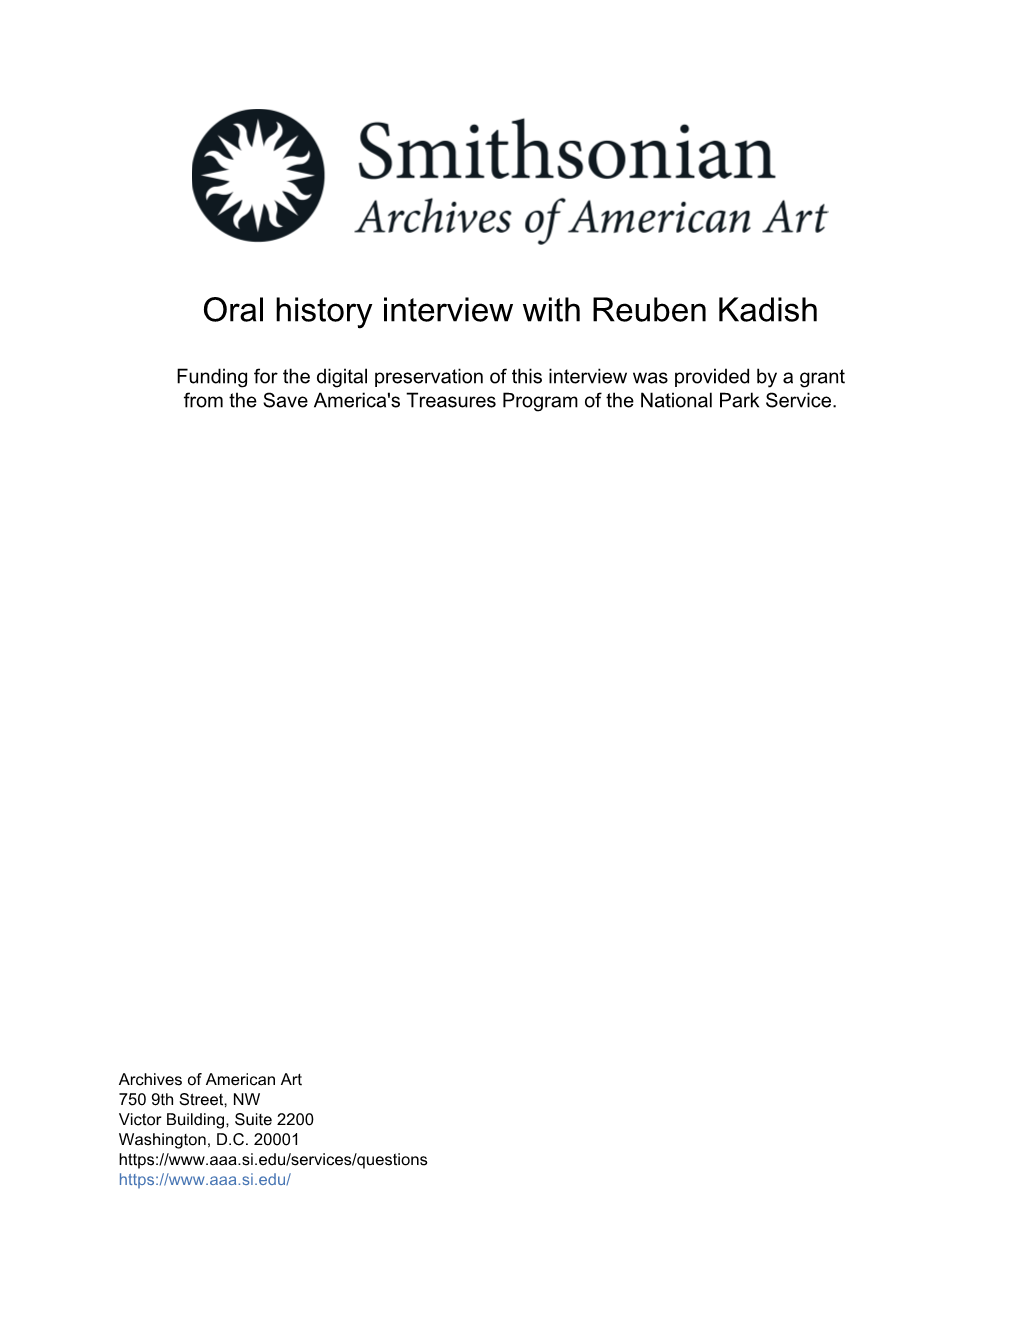 Oral History Interview with Reuben Kadish